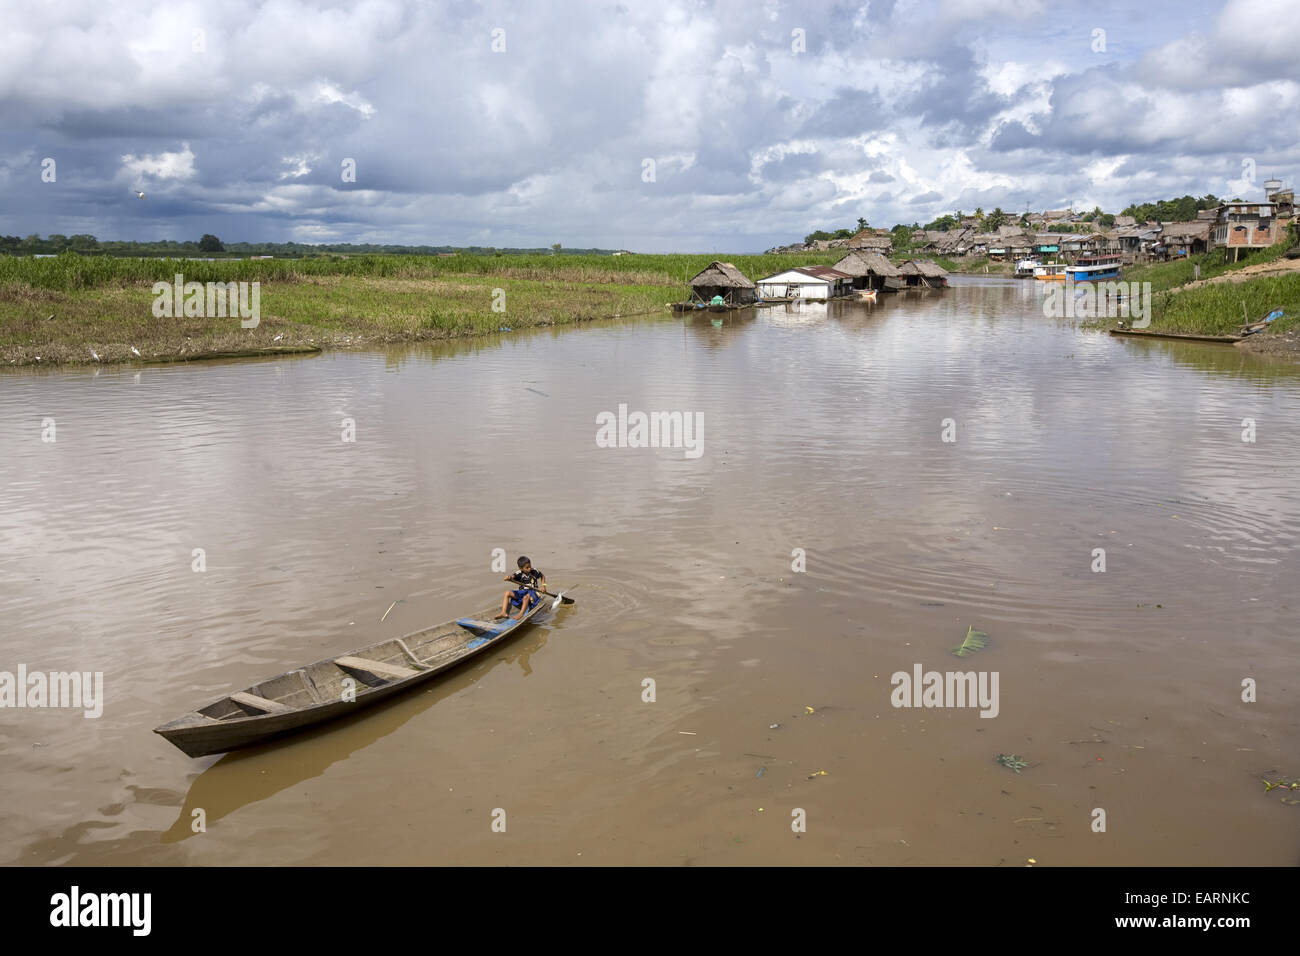 Boat on Uyacali River, Requena, Peru Stock Photo